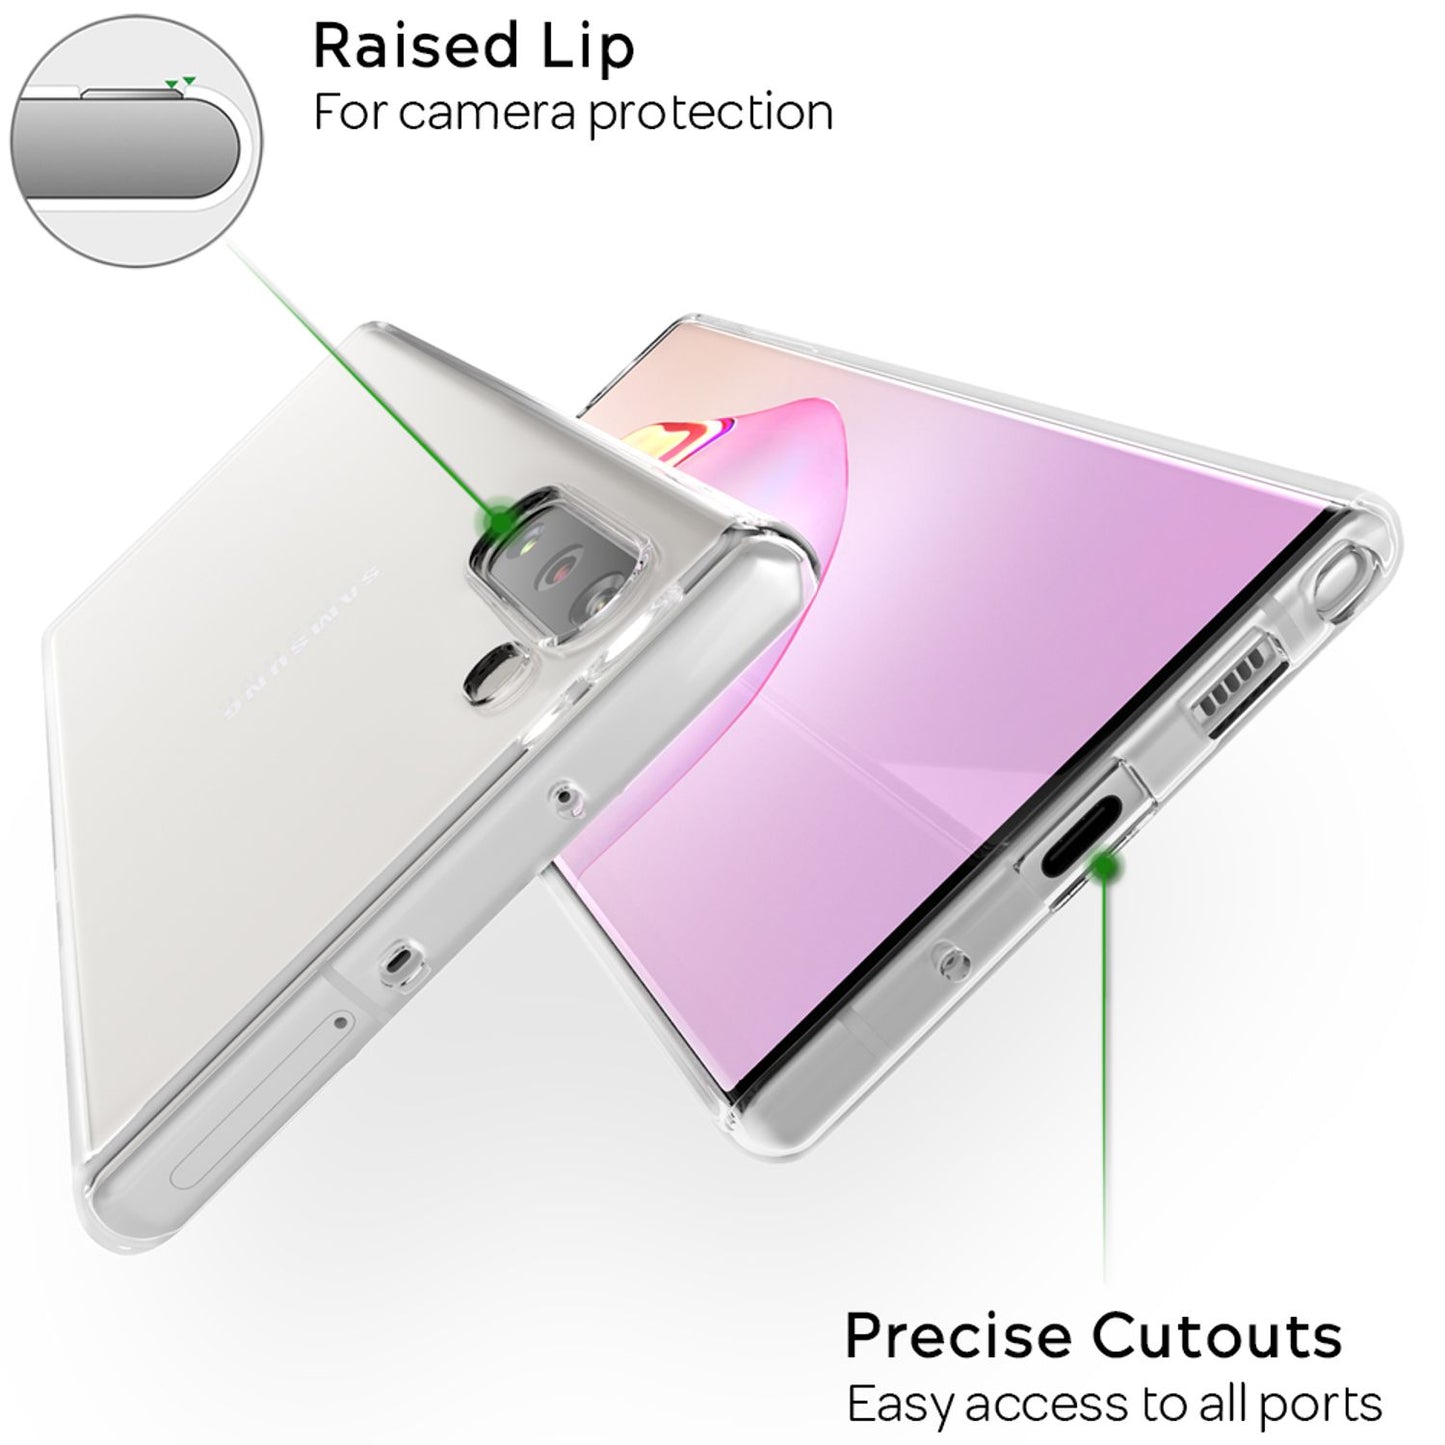 NALIA Handyhülle für Samsung Galaxy Note10 Hülle, Dünne Silikon Schutzhülle Soft